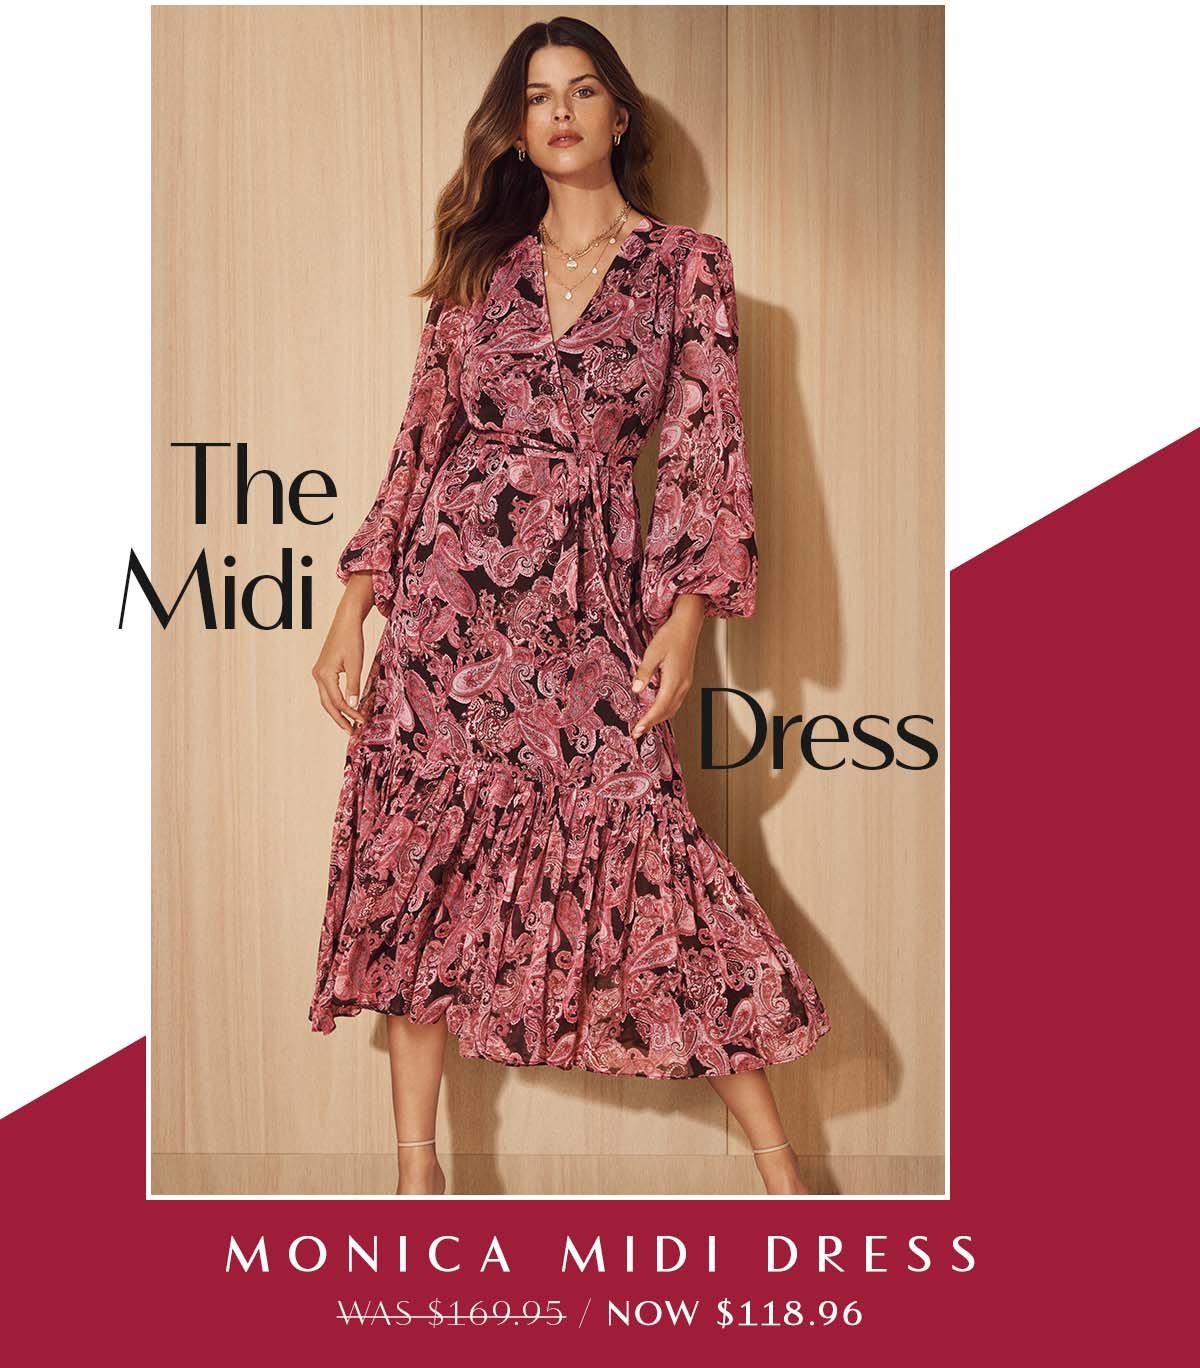 The Midi Dress. Monica Midi Dress WAS $169.95 / NOW $118.96